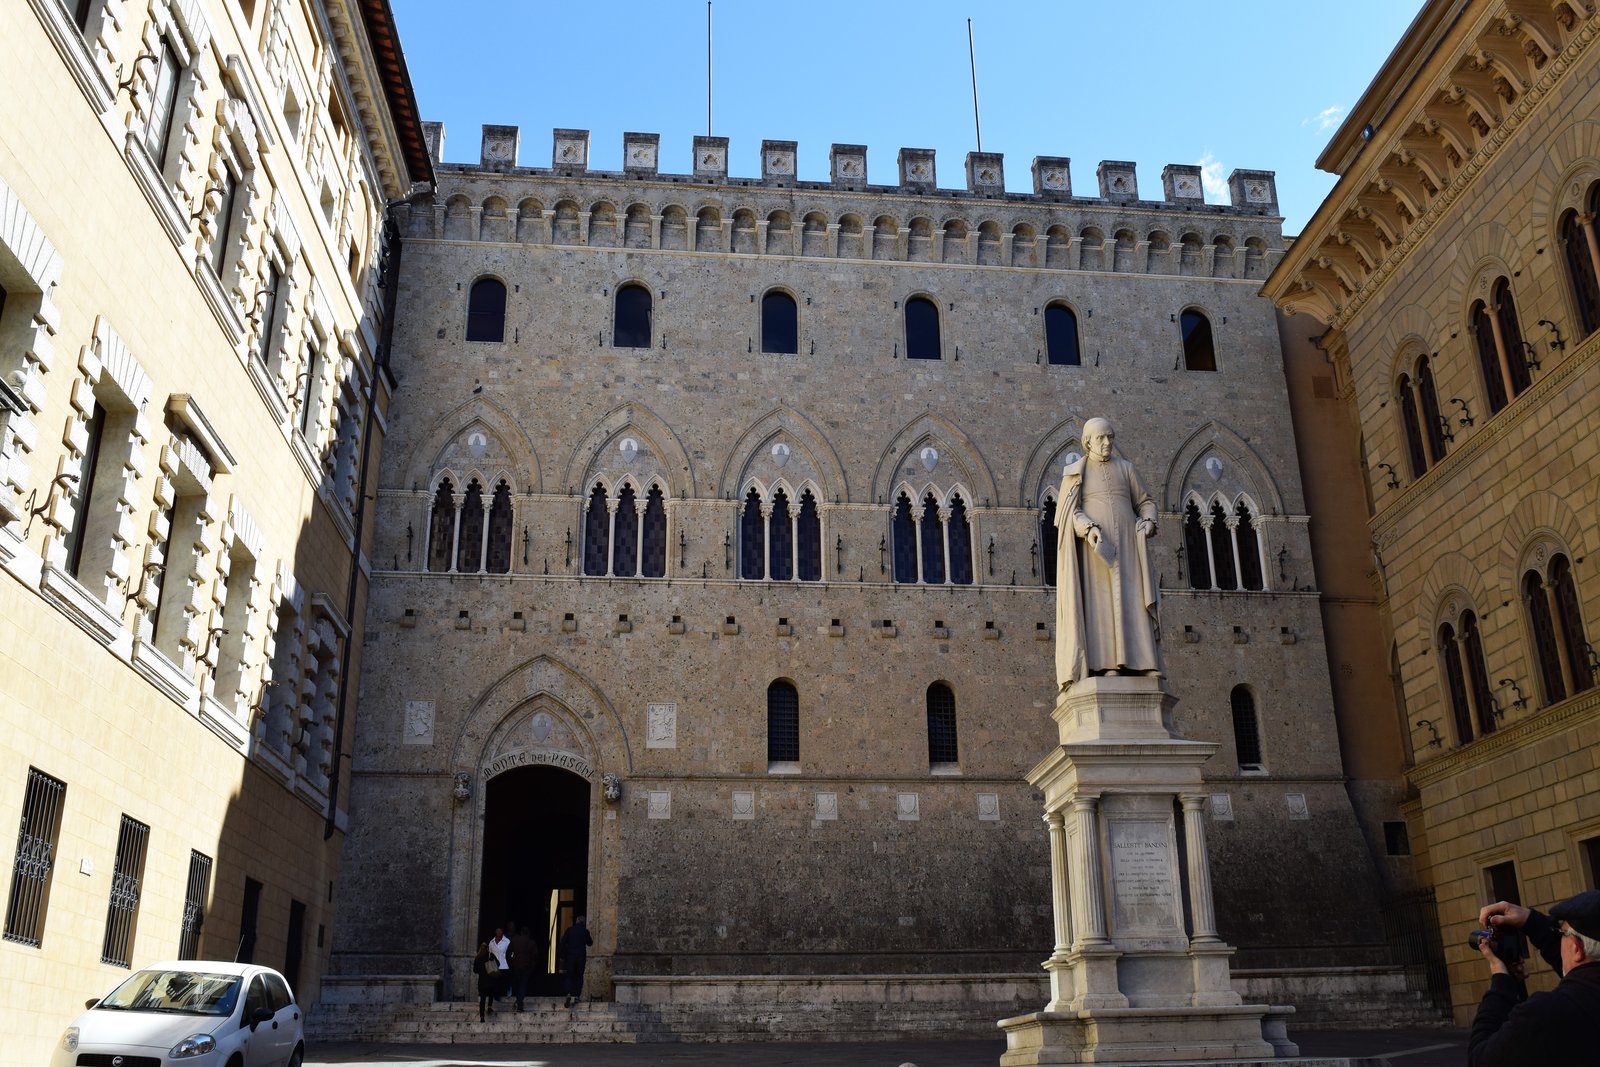 Palazzo Salimberi in Siena, Italy. ouritalianjourney.com